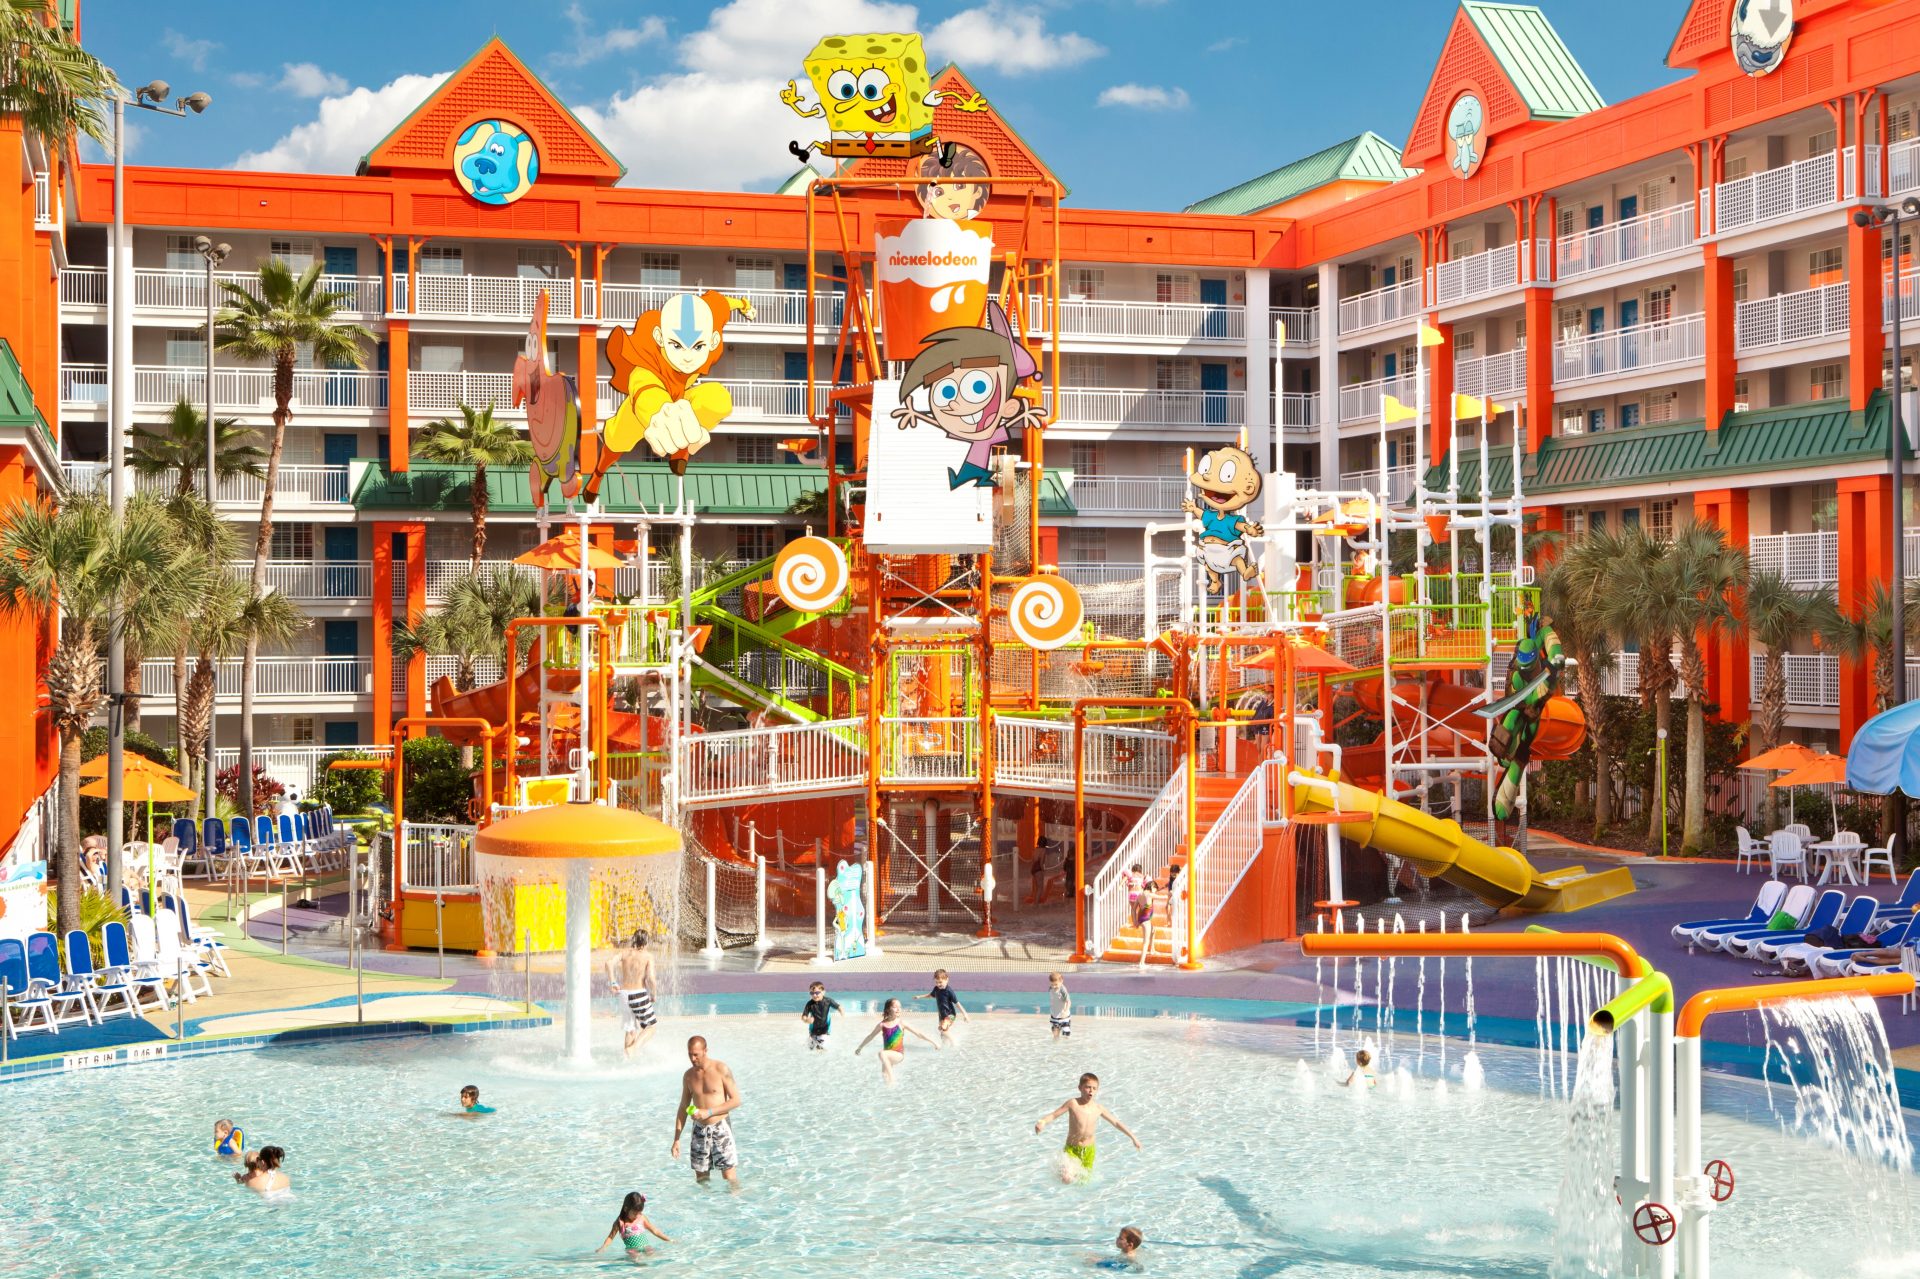 Nickelodeon Suites Resort in Orlando is NO MORE!